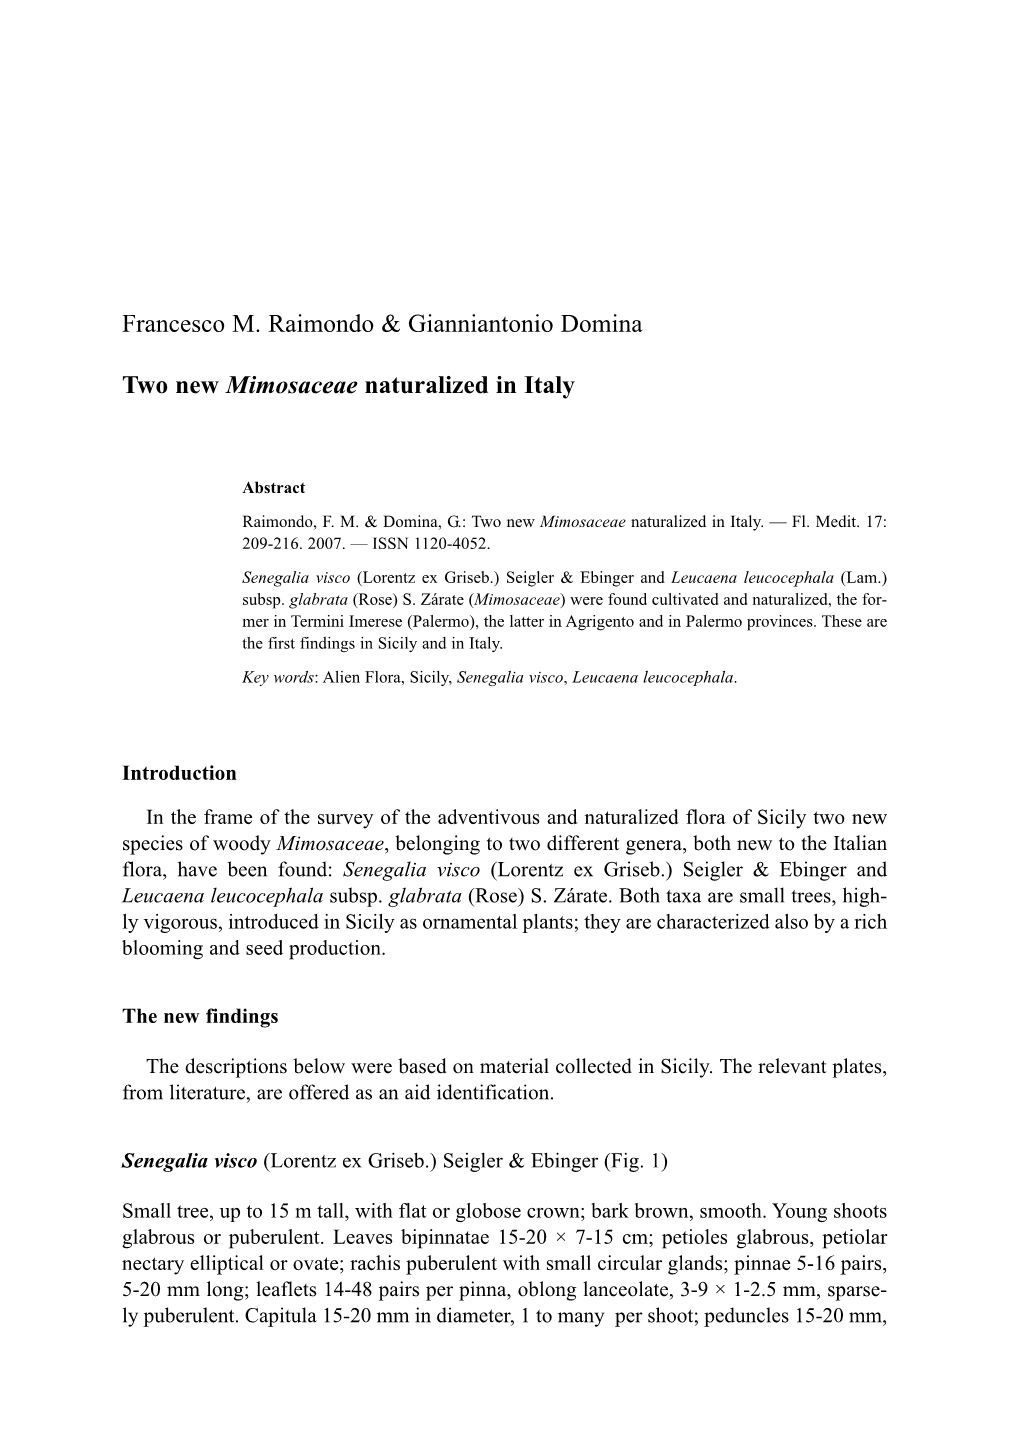 Francesco M. Raimondo & Gianniantonio Domina Two New Mimosaceae Naturalized in Italy